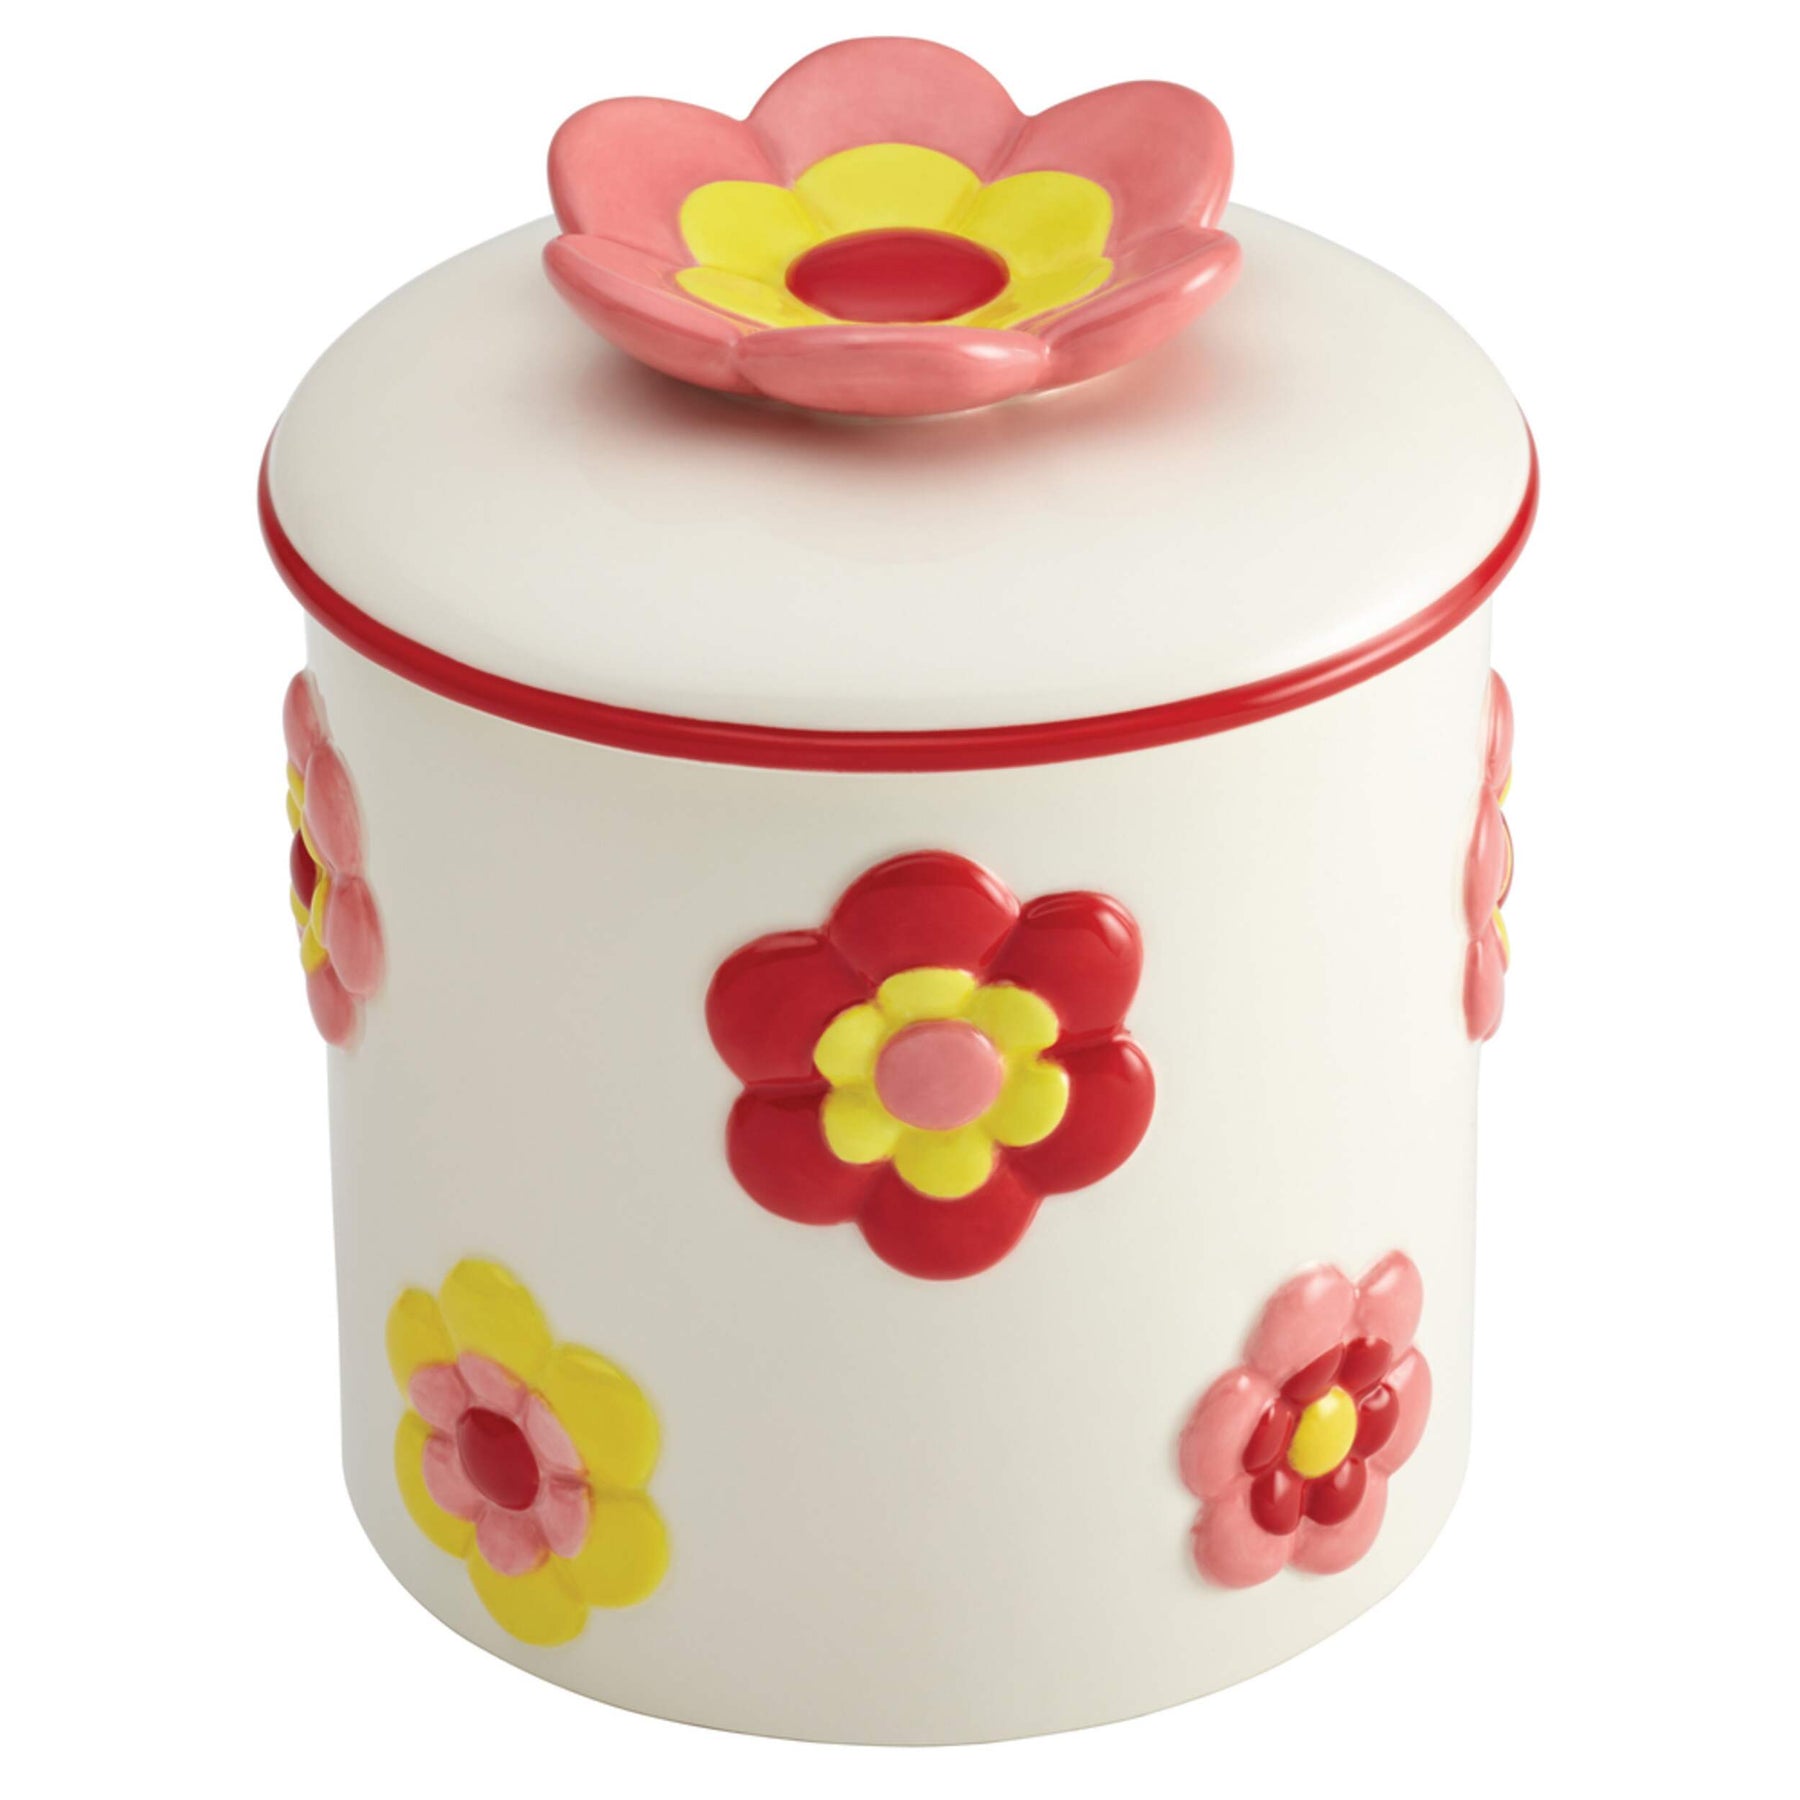 Meyer Cake Boss Ceramic Cookie Jar Flowers Red Yellow White 5 1/2